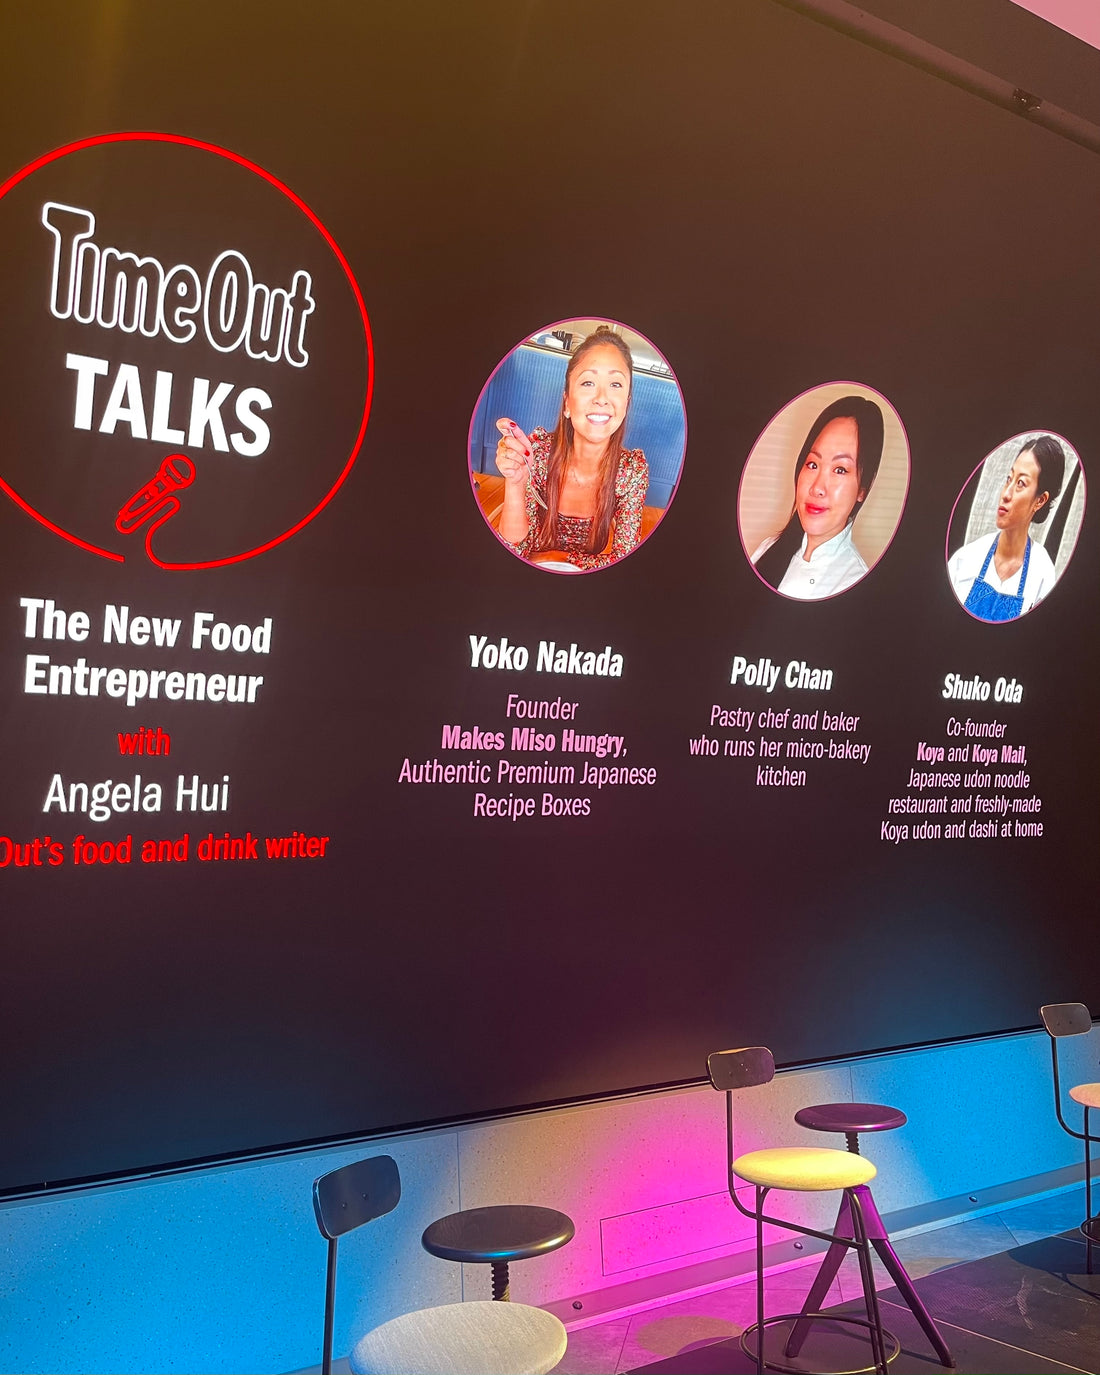 TimeOut Talks x SAMSUNG’s New Food Entrepreneur